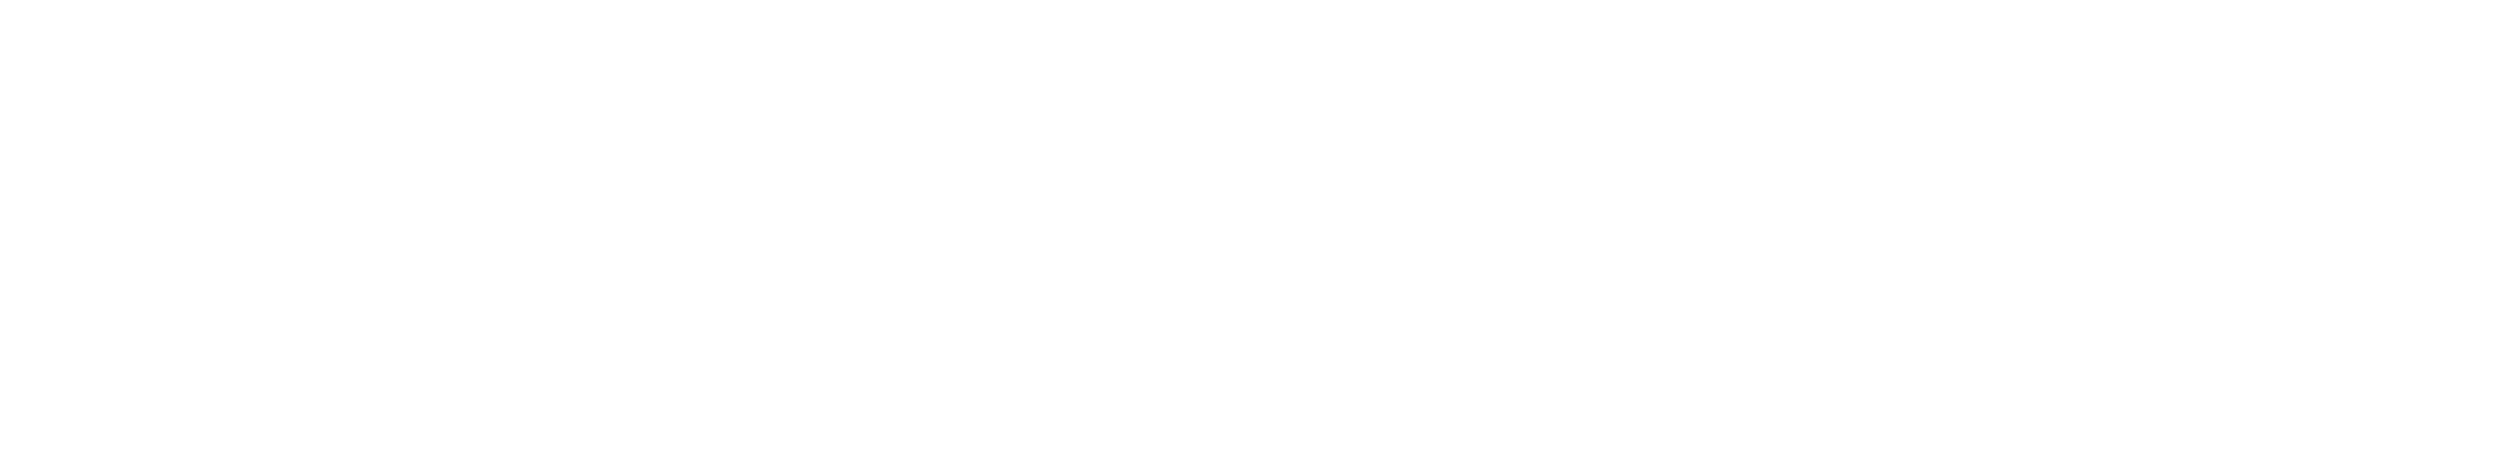 logo wit BiljoenKeur Bouwkundige Keuring